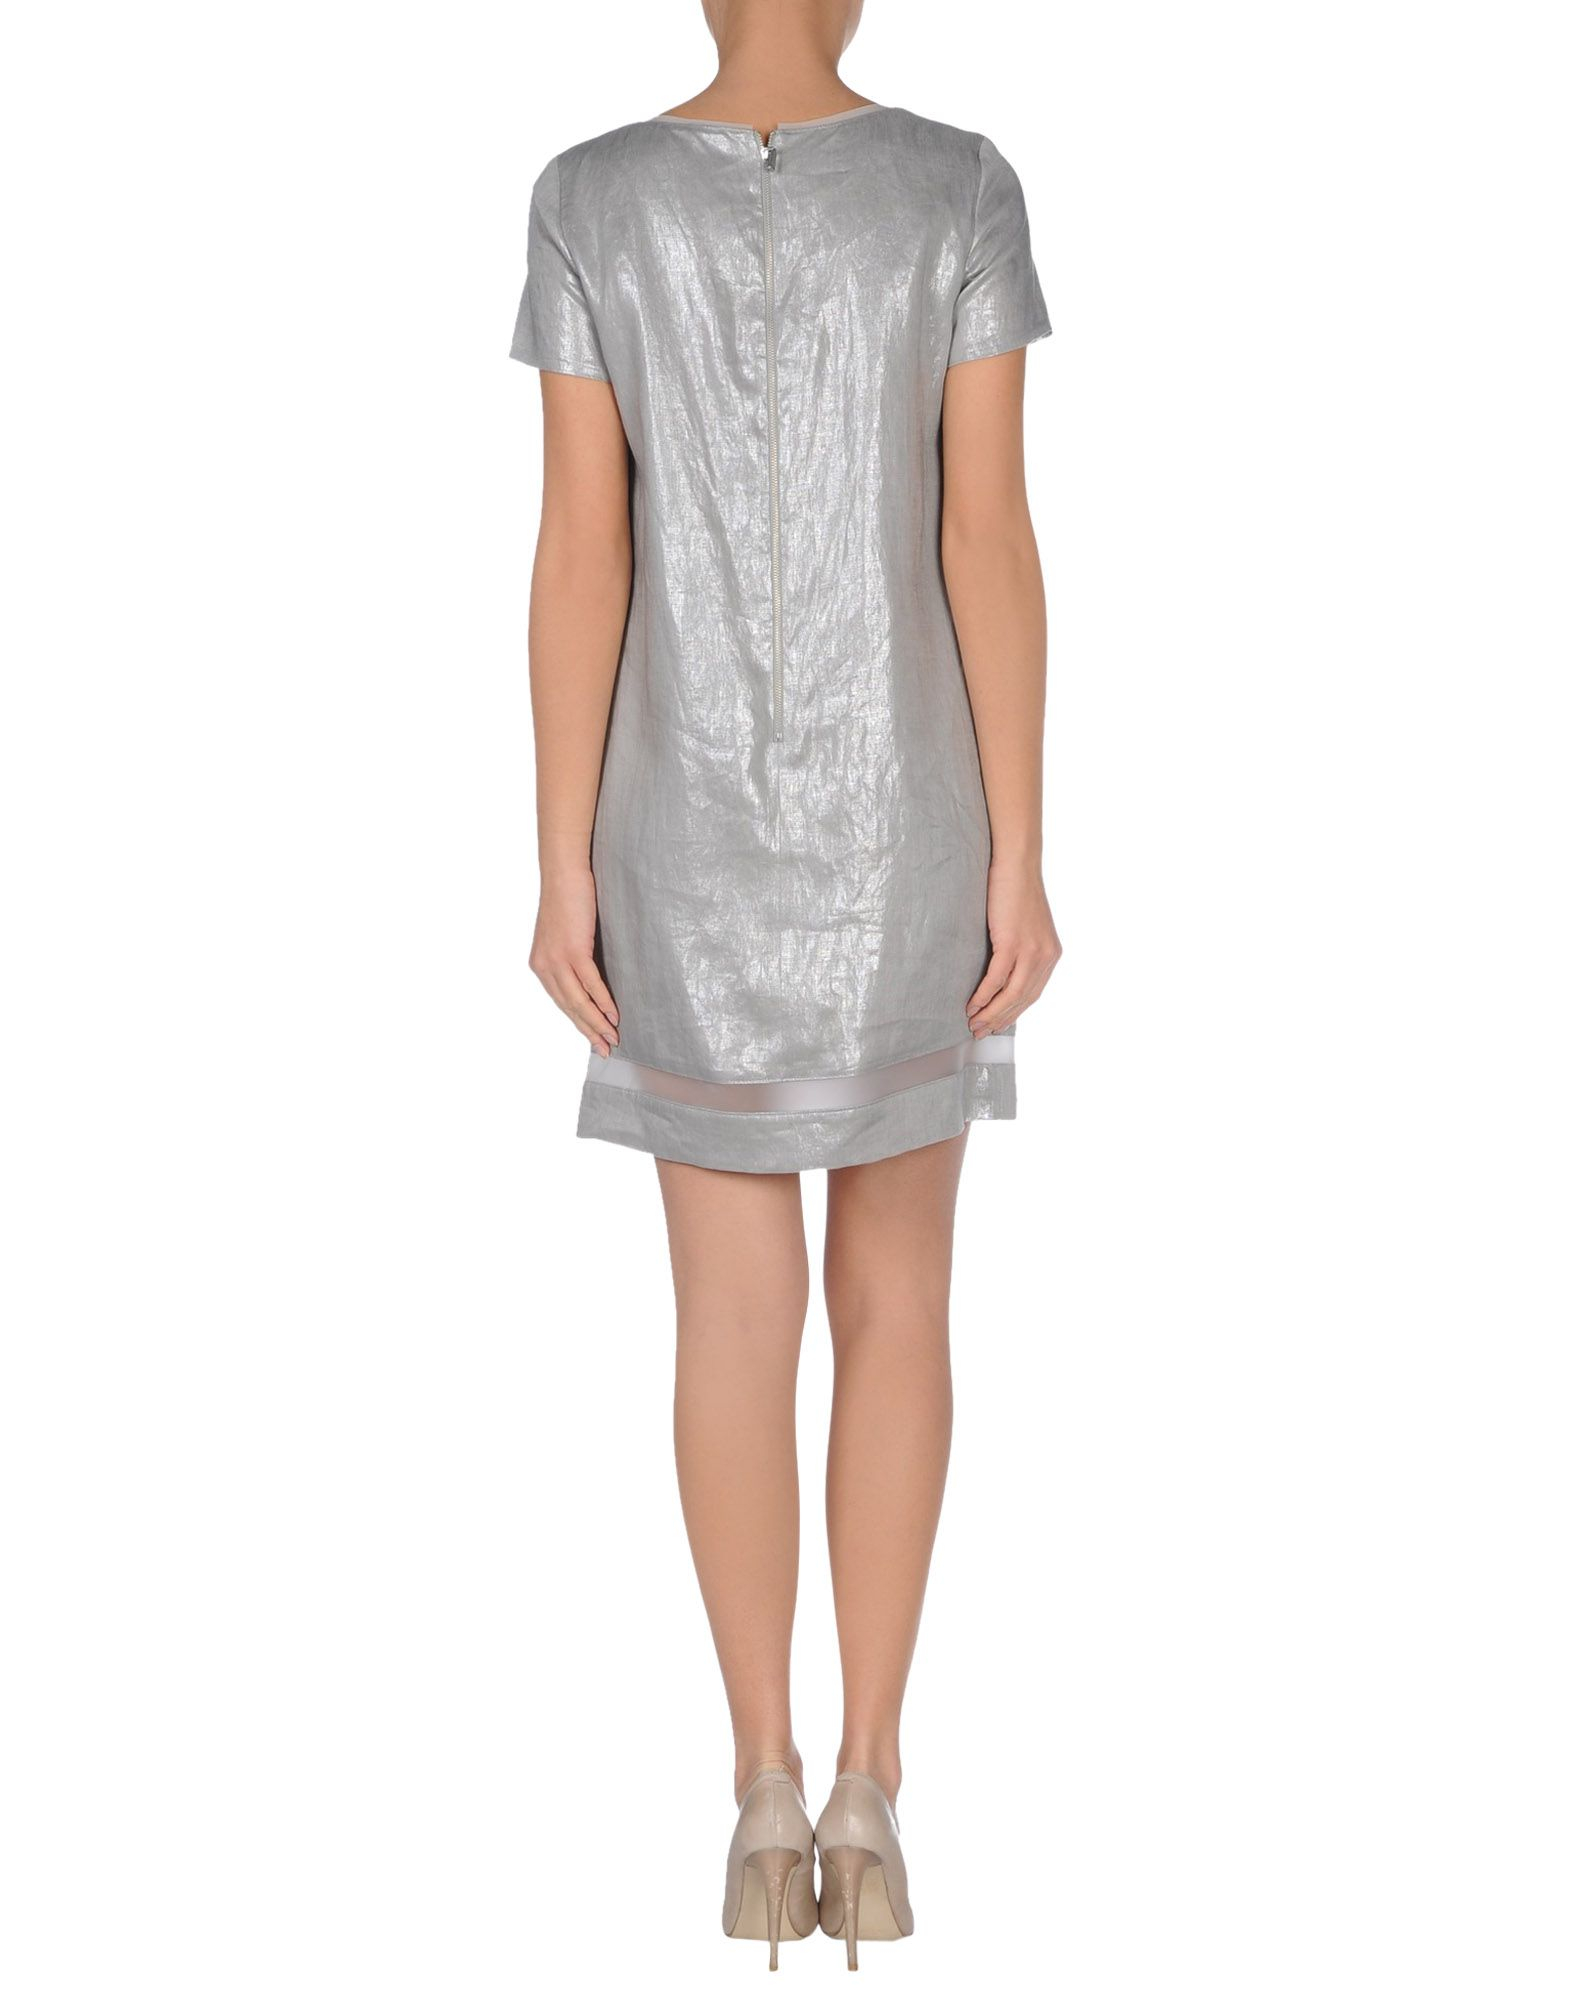 Gray dresses short